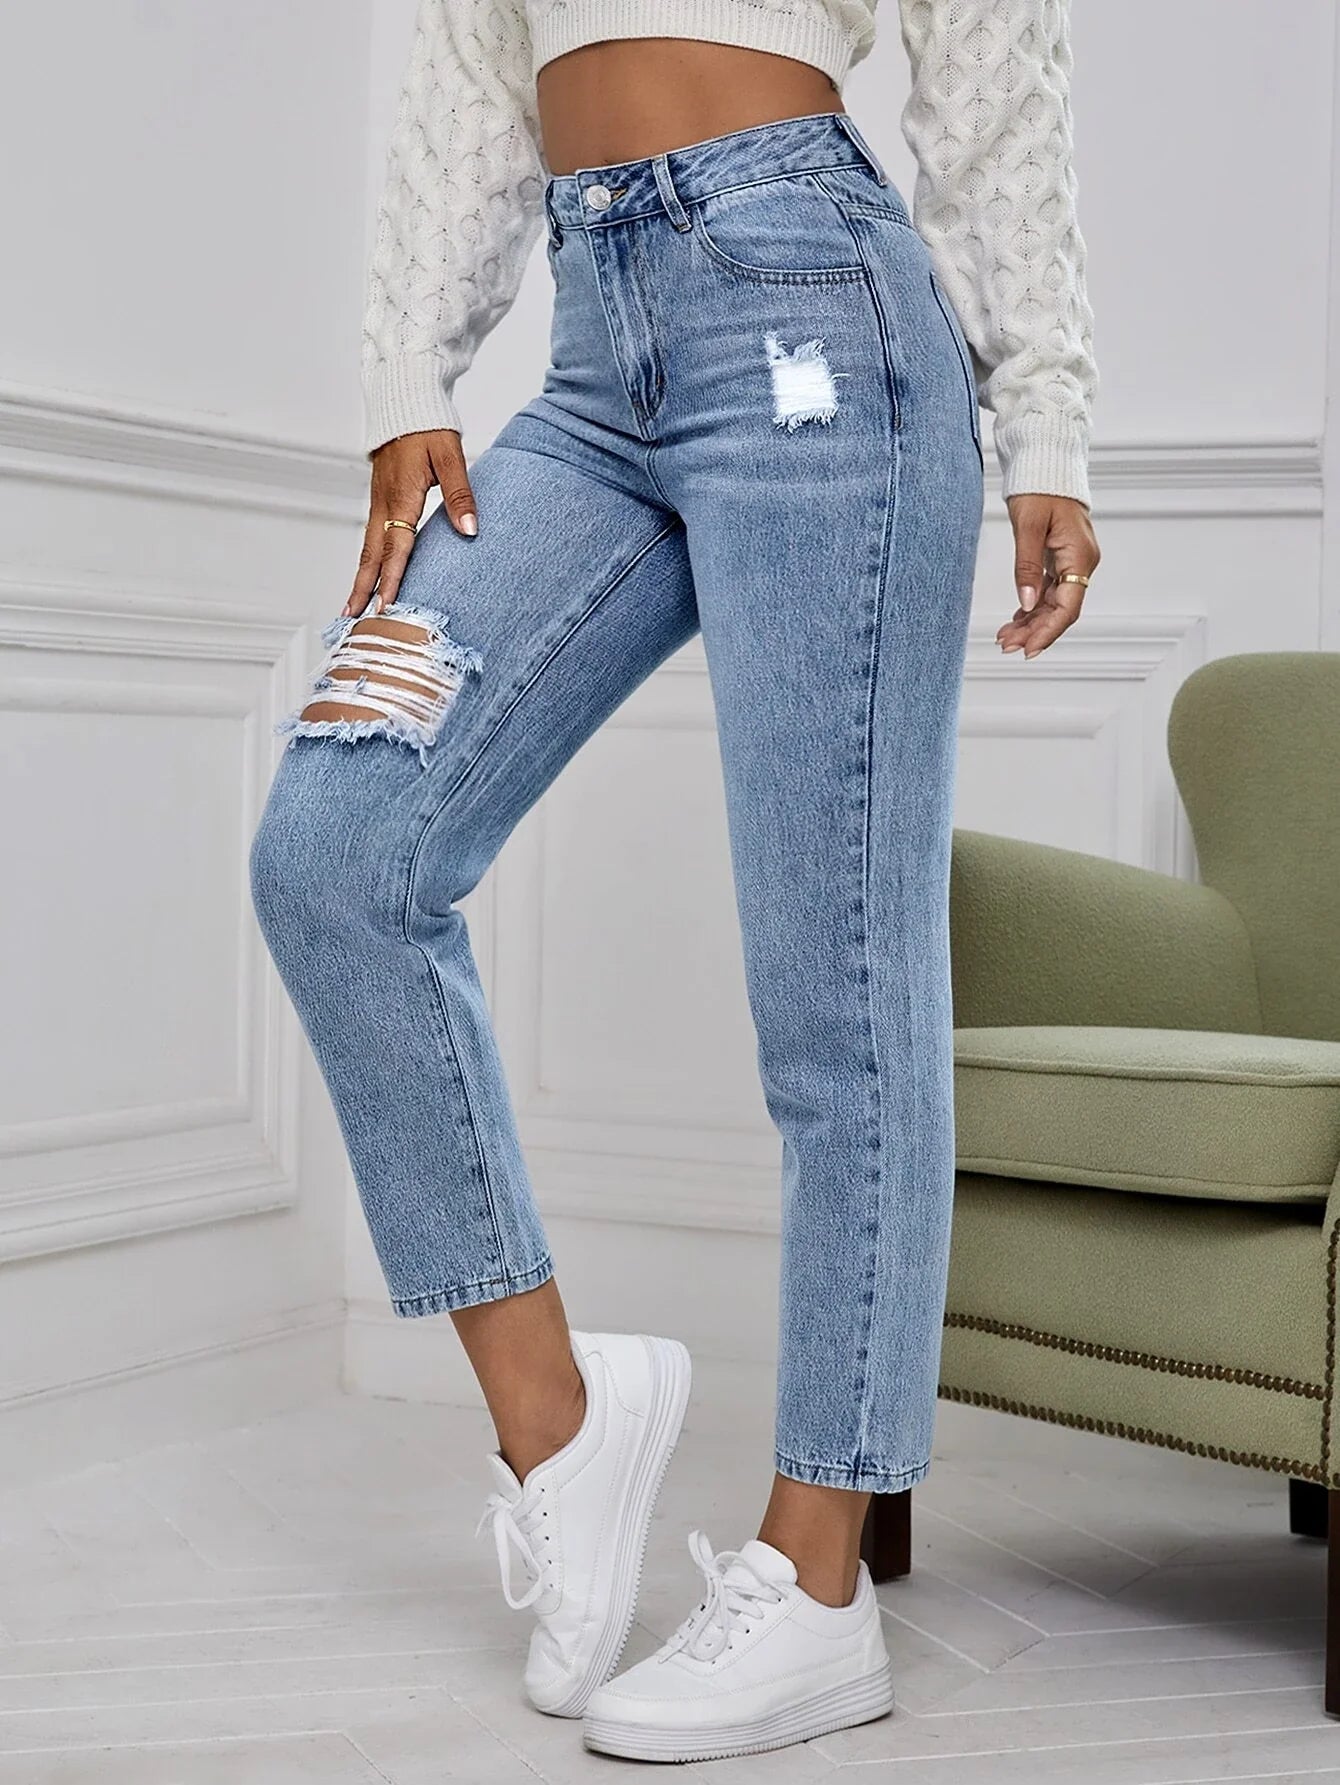 Shein Jeans Womens XS Blue High Waist Tapered Leg Mom Denim Pants